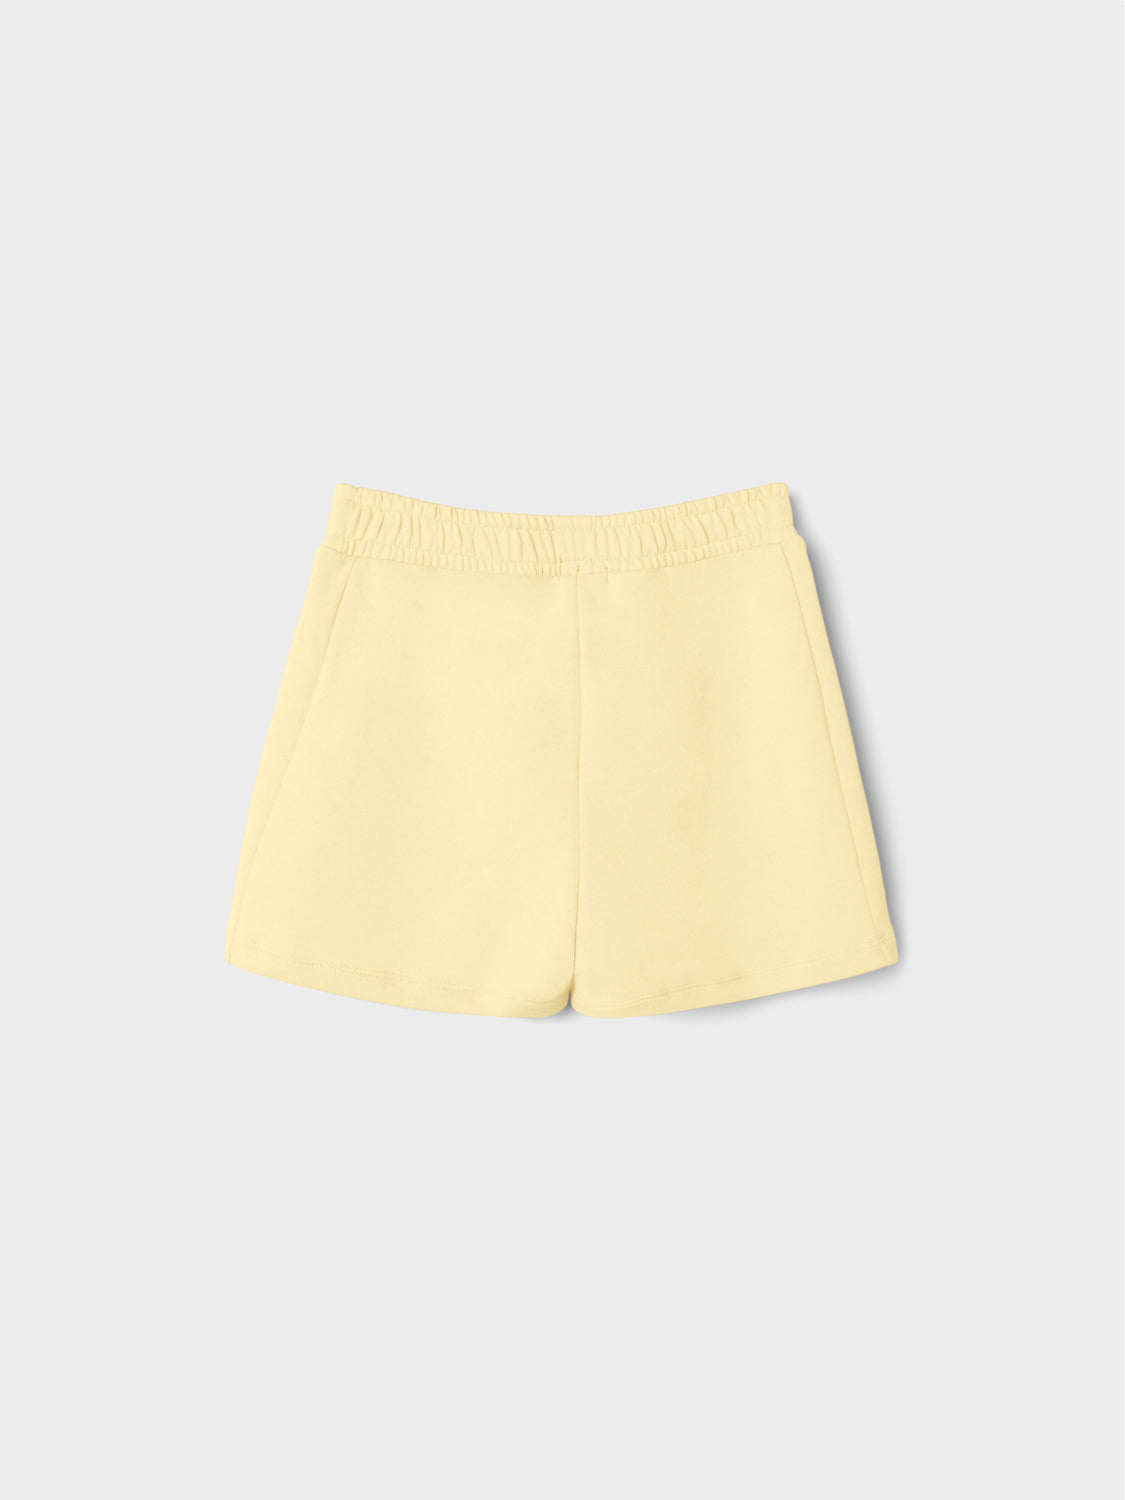 NKFHIKARLA Shorts - Double Cream